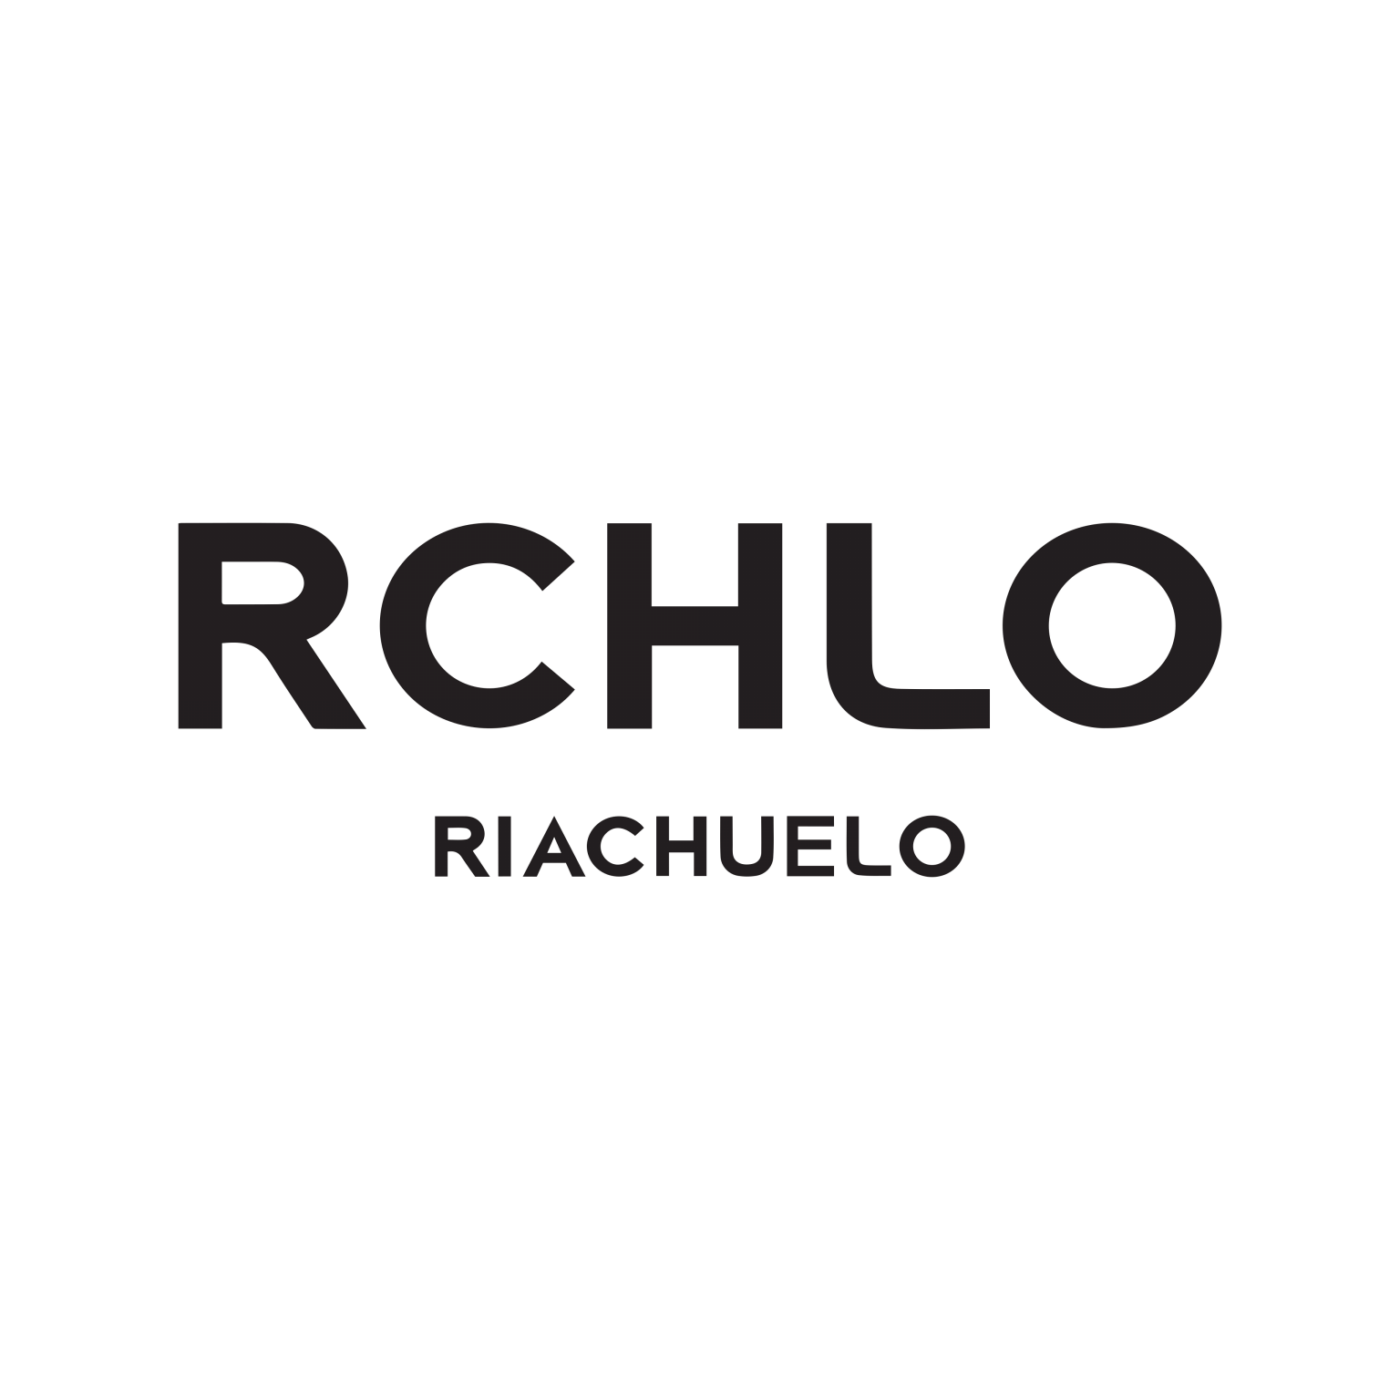 riachuelo-logo-0-1536x1536